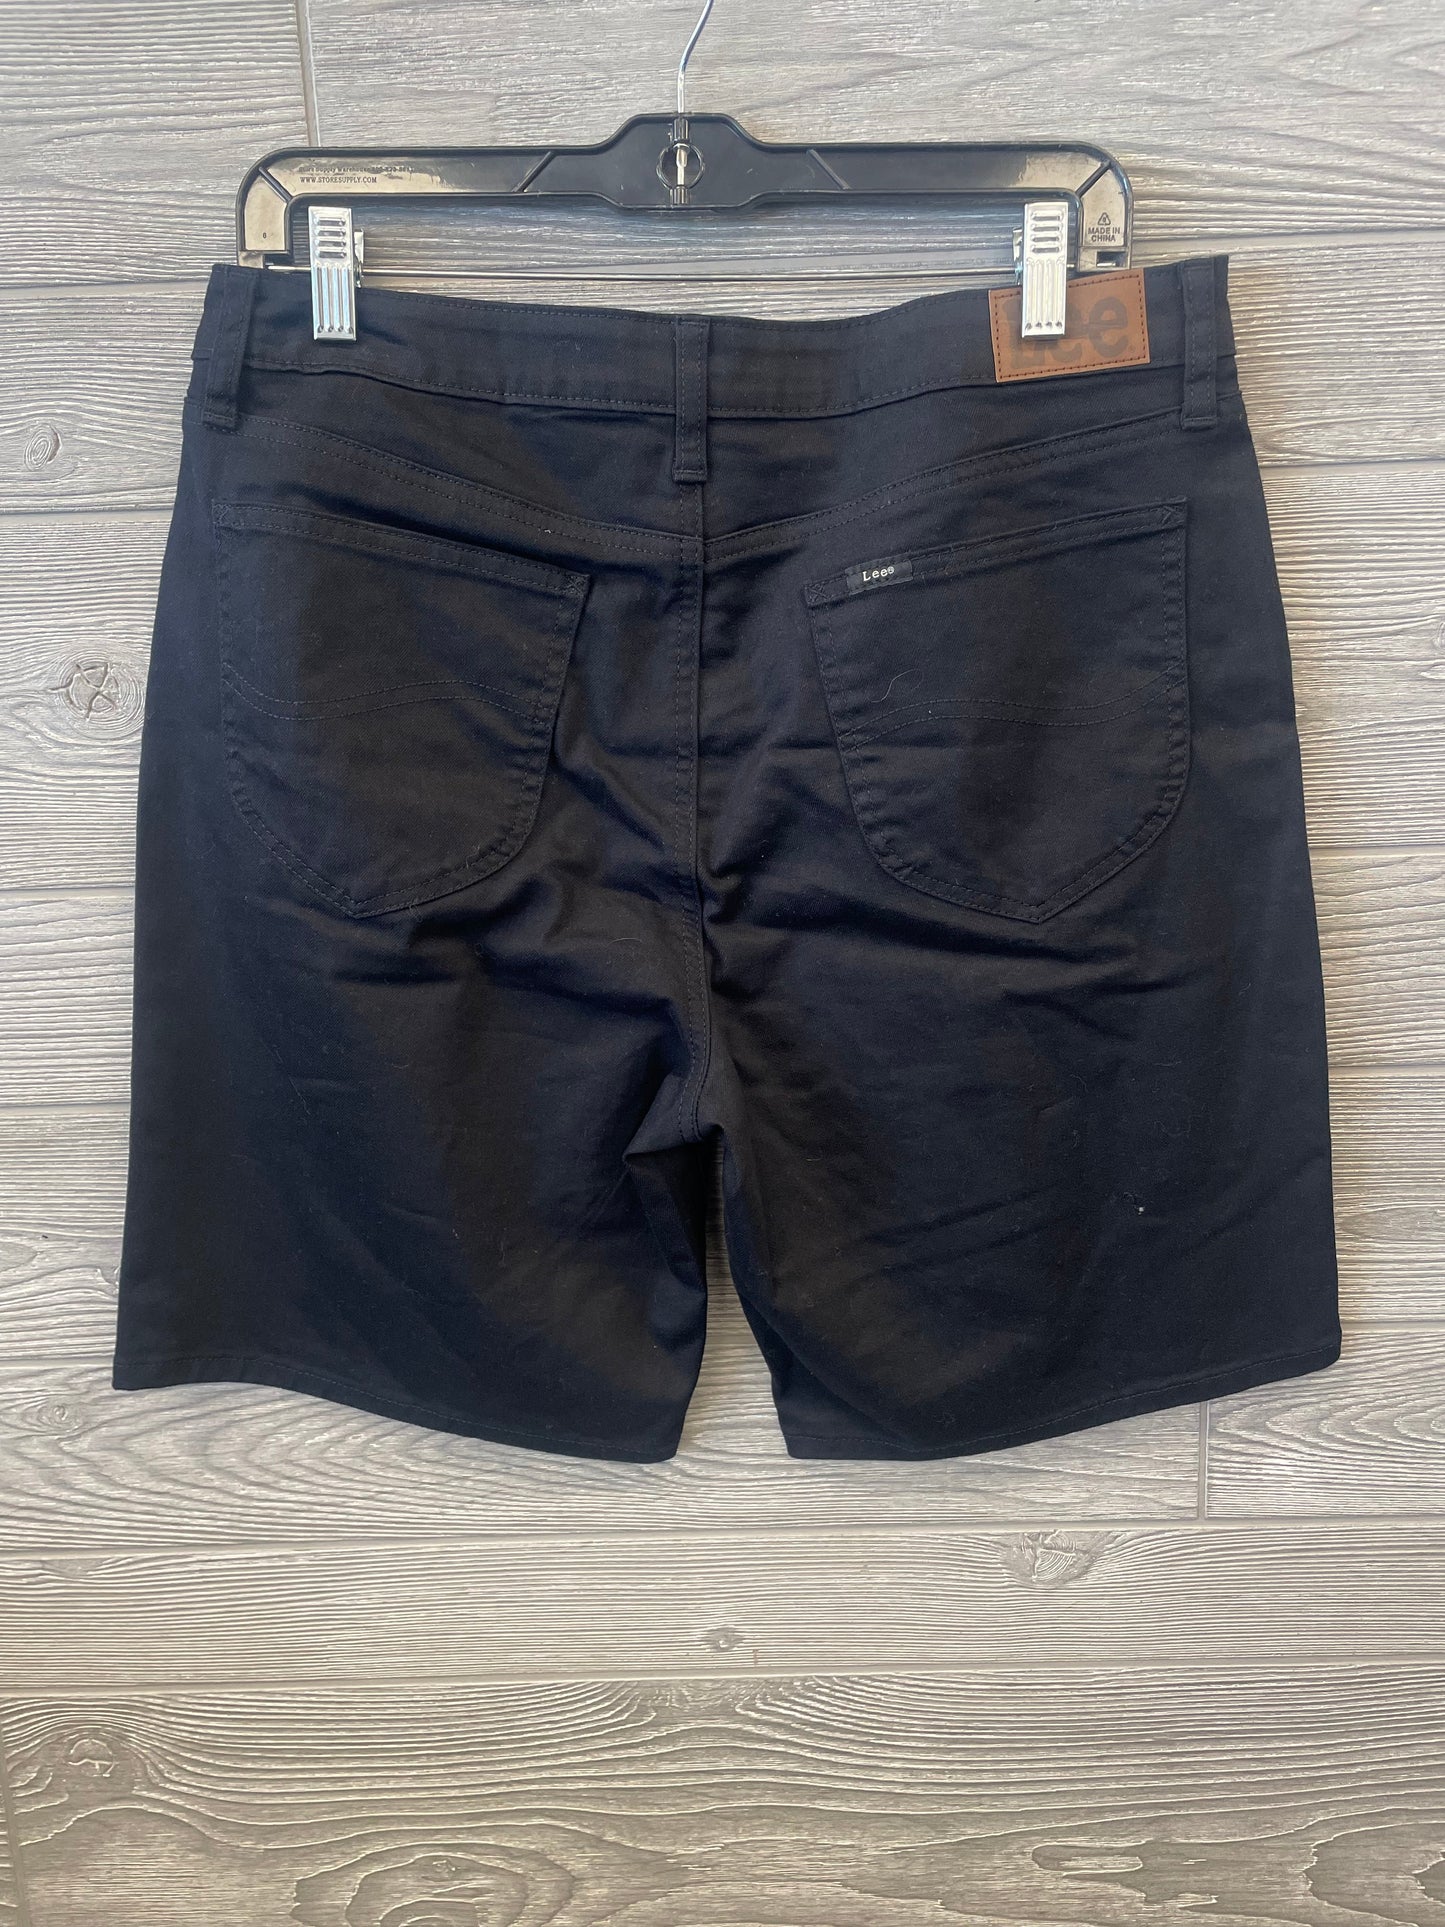 Black Denim Shorts Lee, Size 14